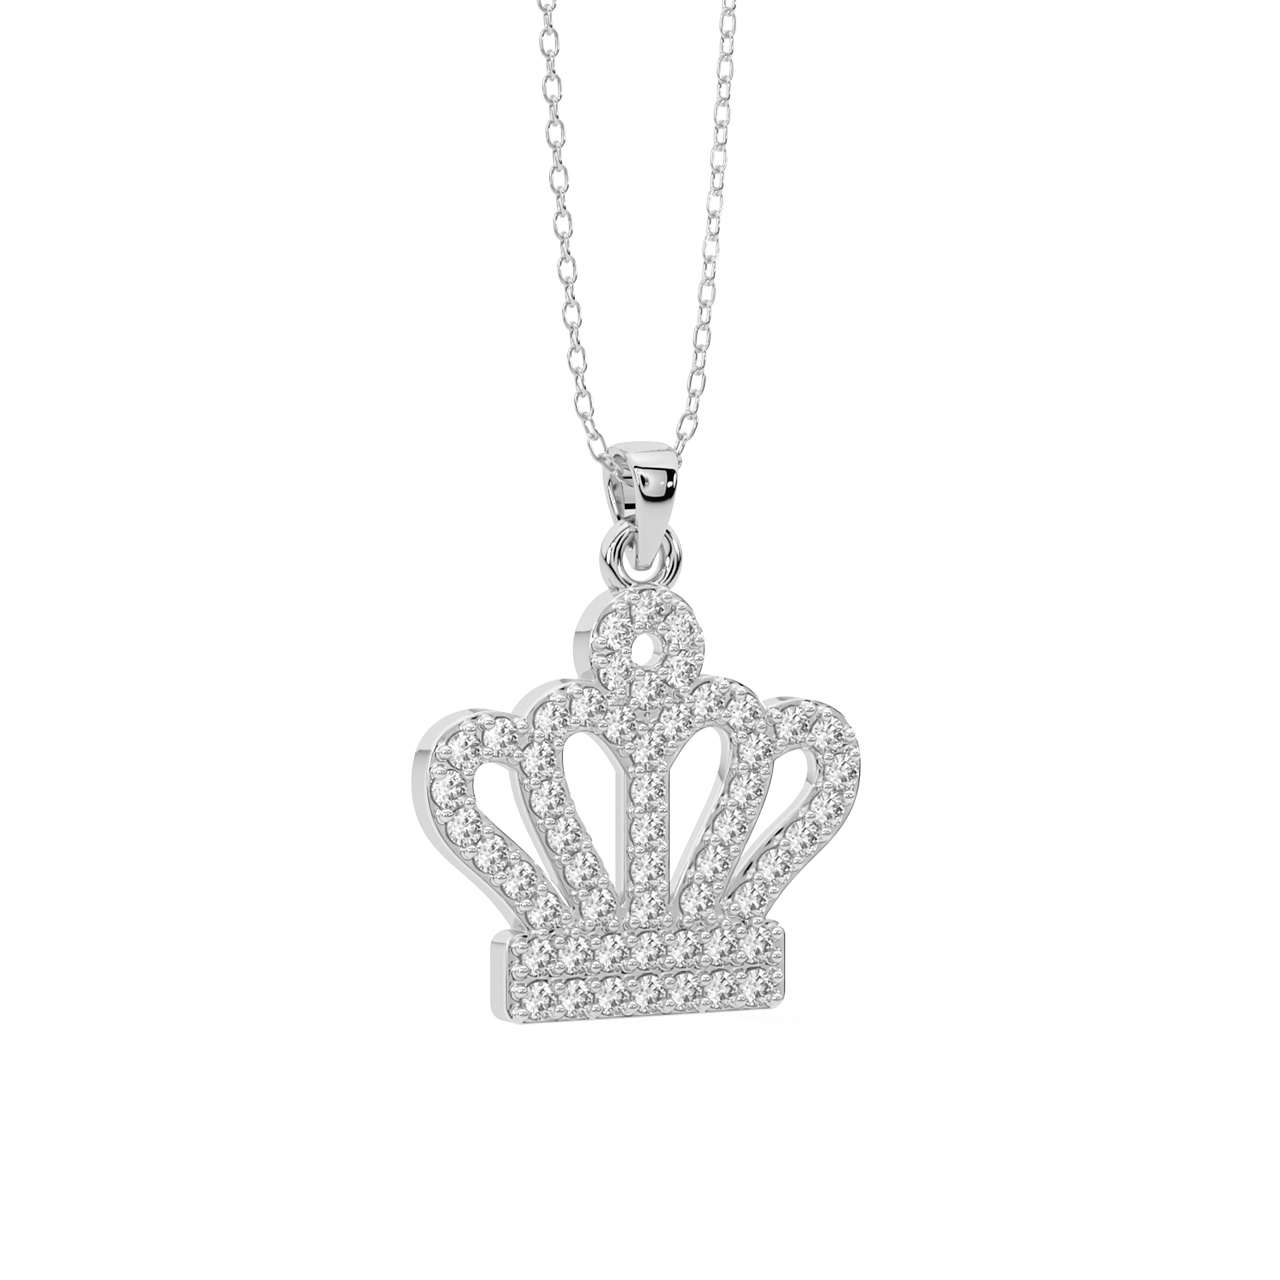 Queen's Crown Diamond Pendant